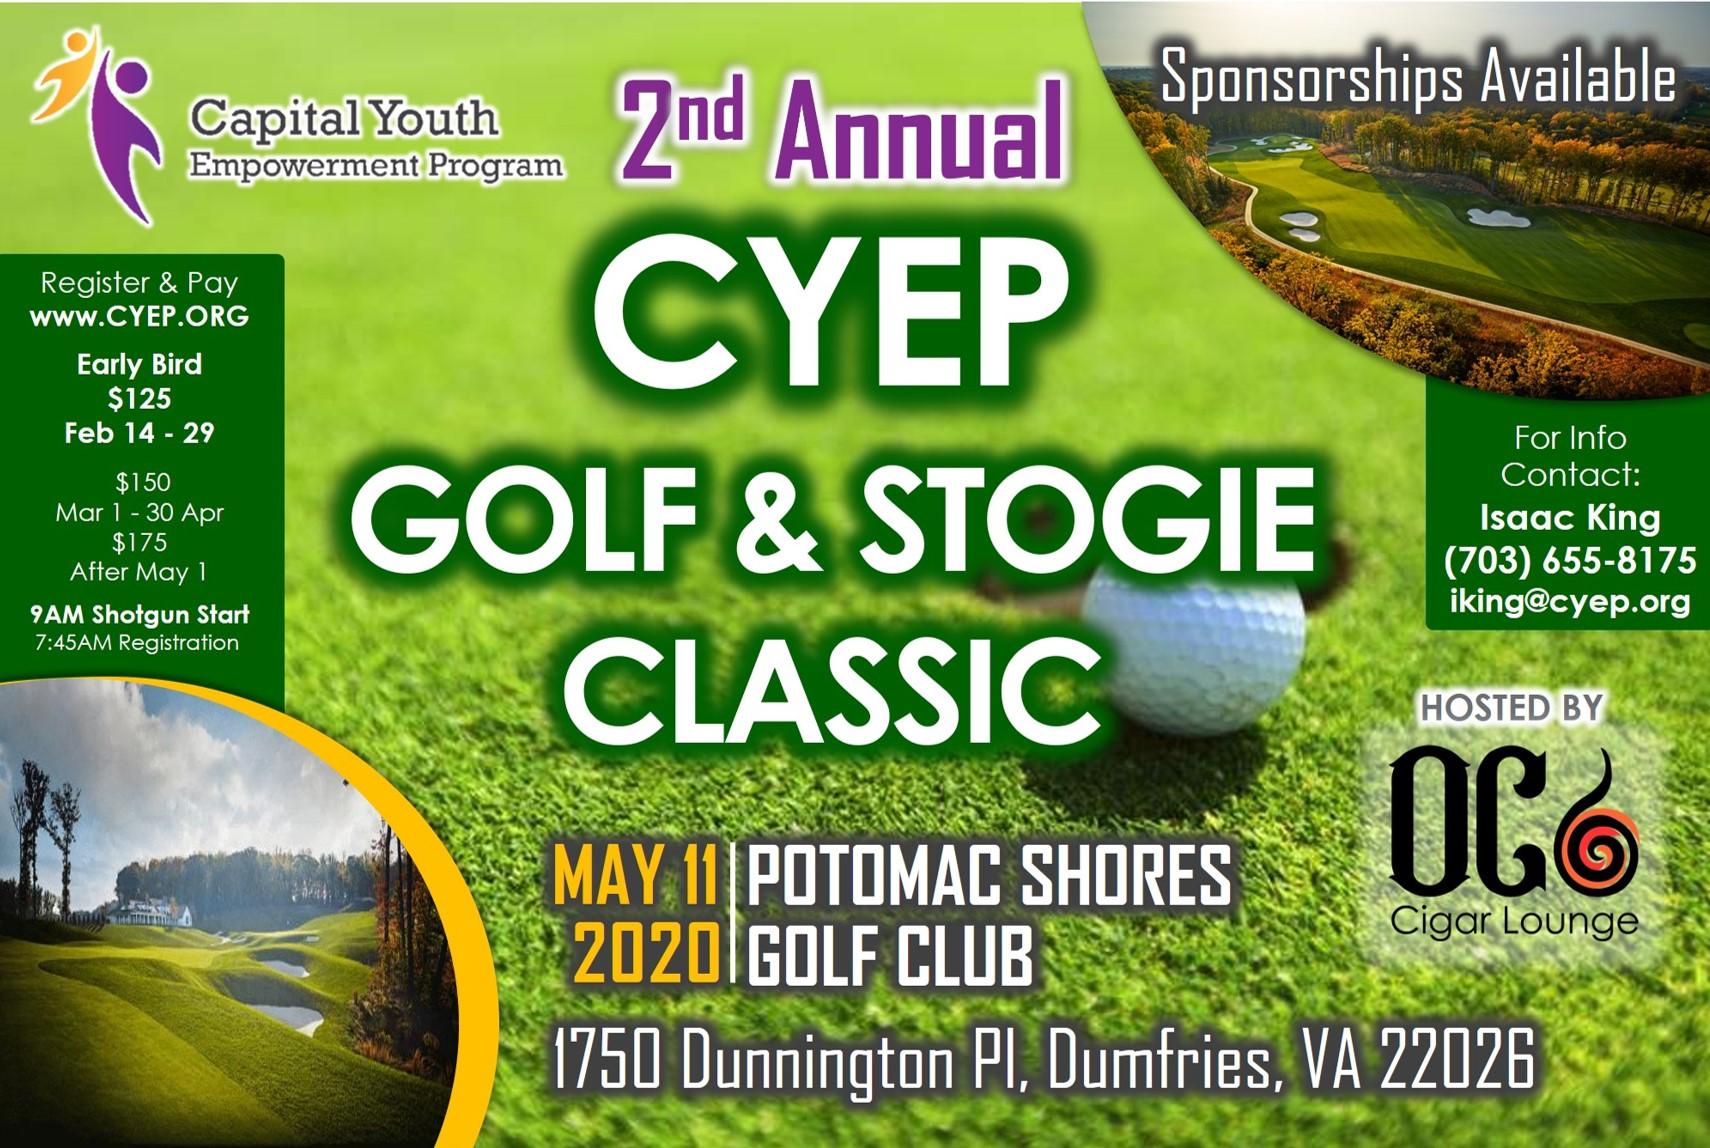 2nd Annual CYEP Golf & Stogie Classic